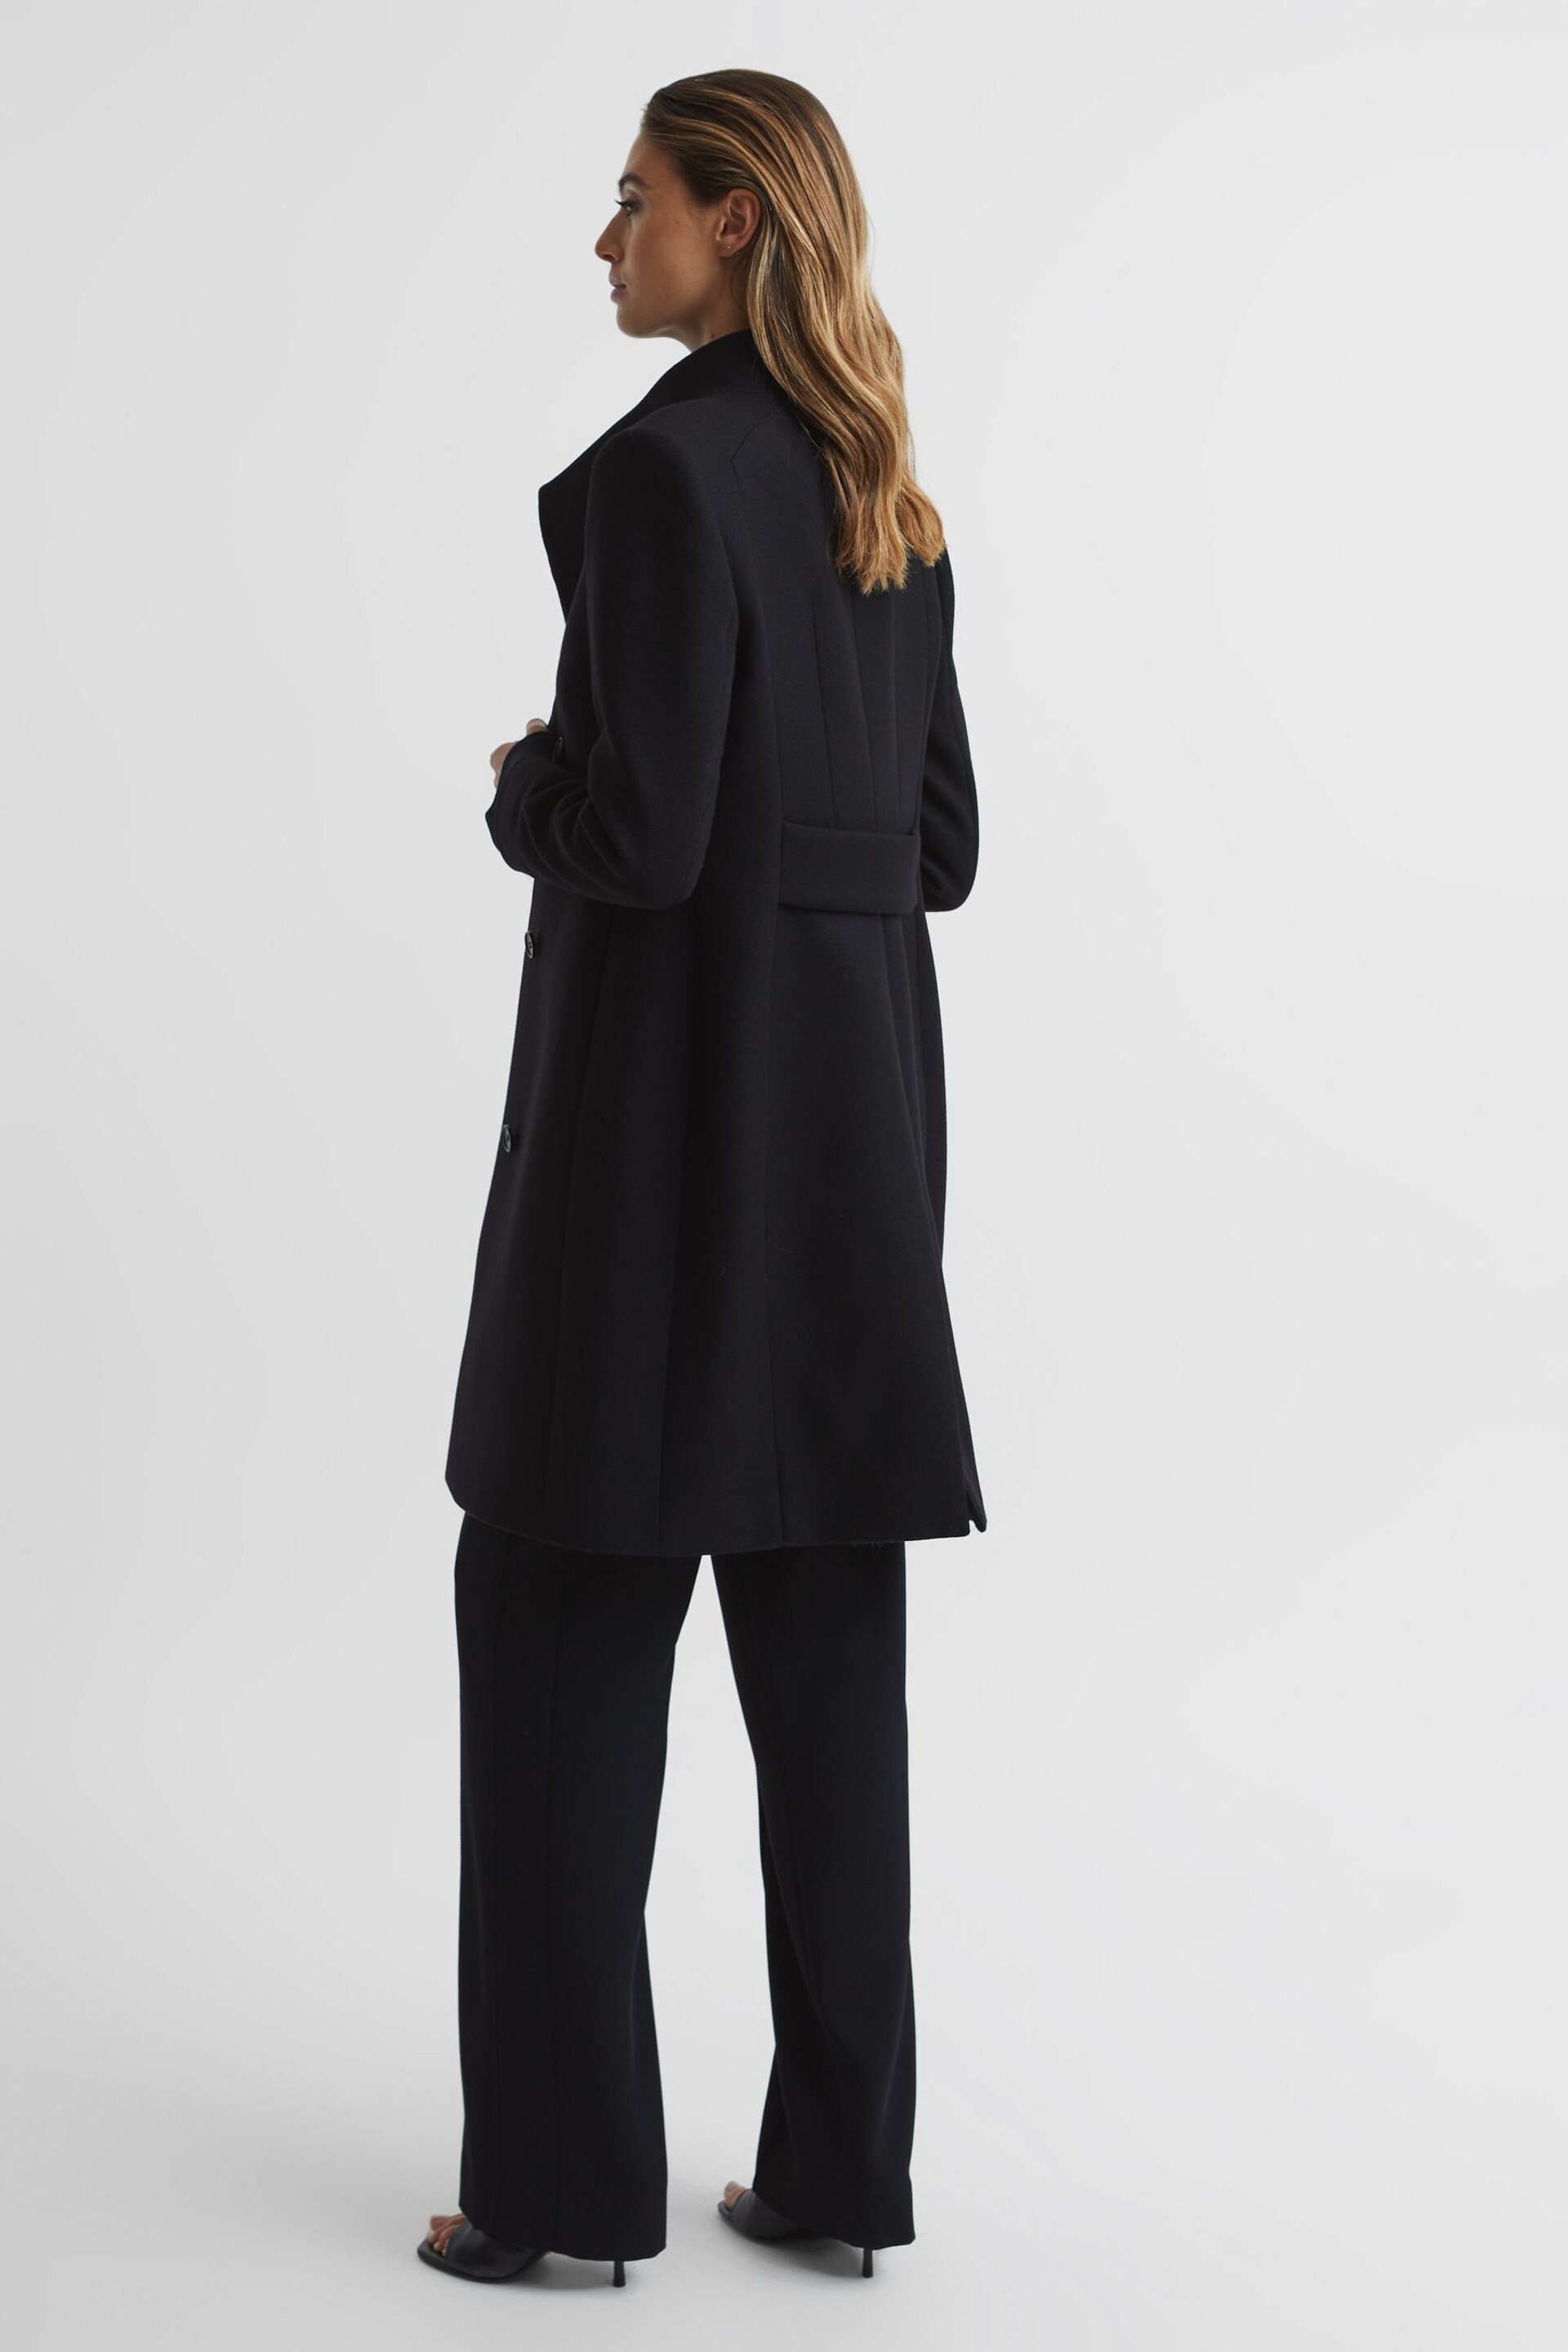 Reiss Black Mia Petite Wool Blend Mid-Length Coat - Image 5 of 7